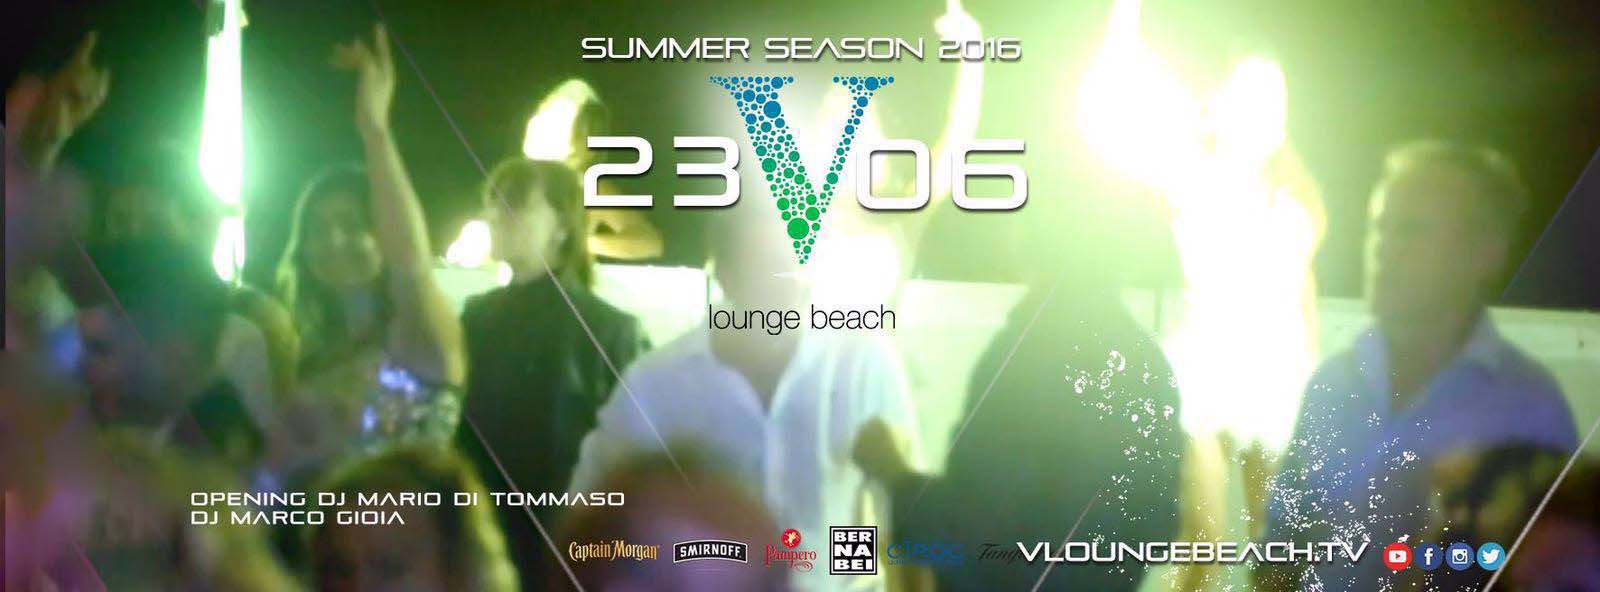 V Lounge Ostia - Giovedi 23 Giugno 2016 - Aperitivo Live Discoteca - giovedì 23 giugno 2016